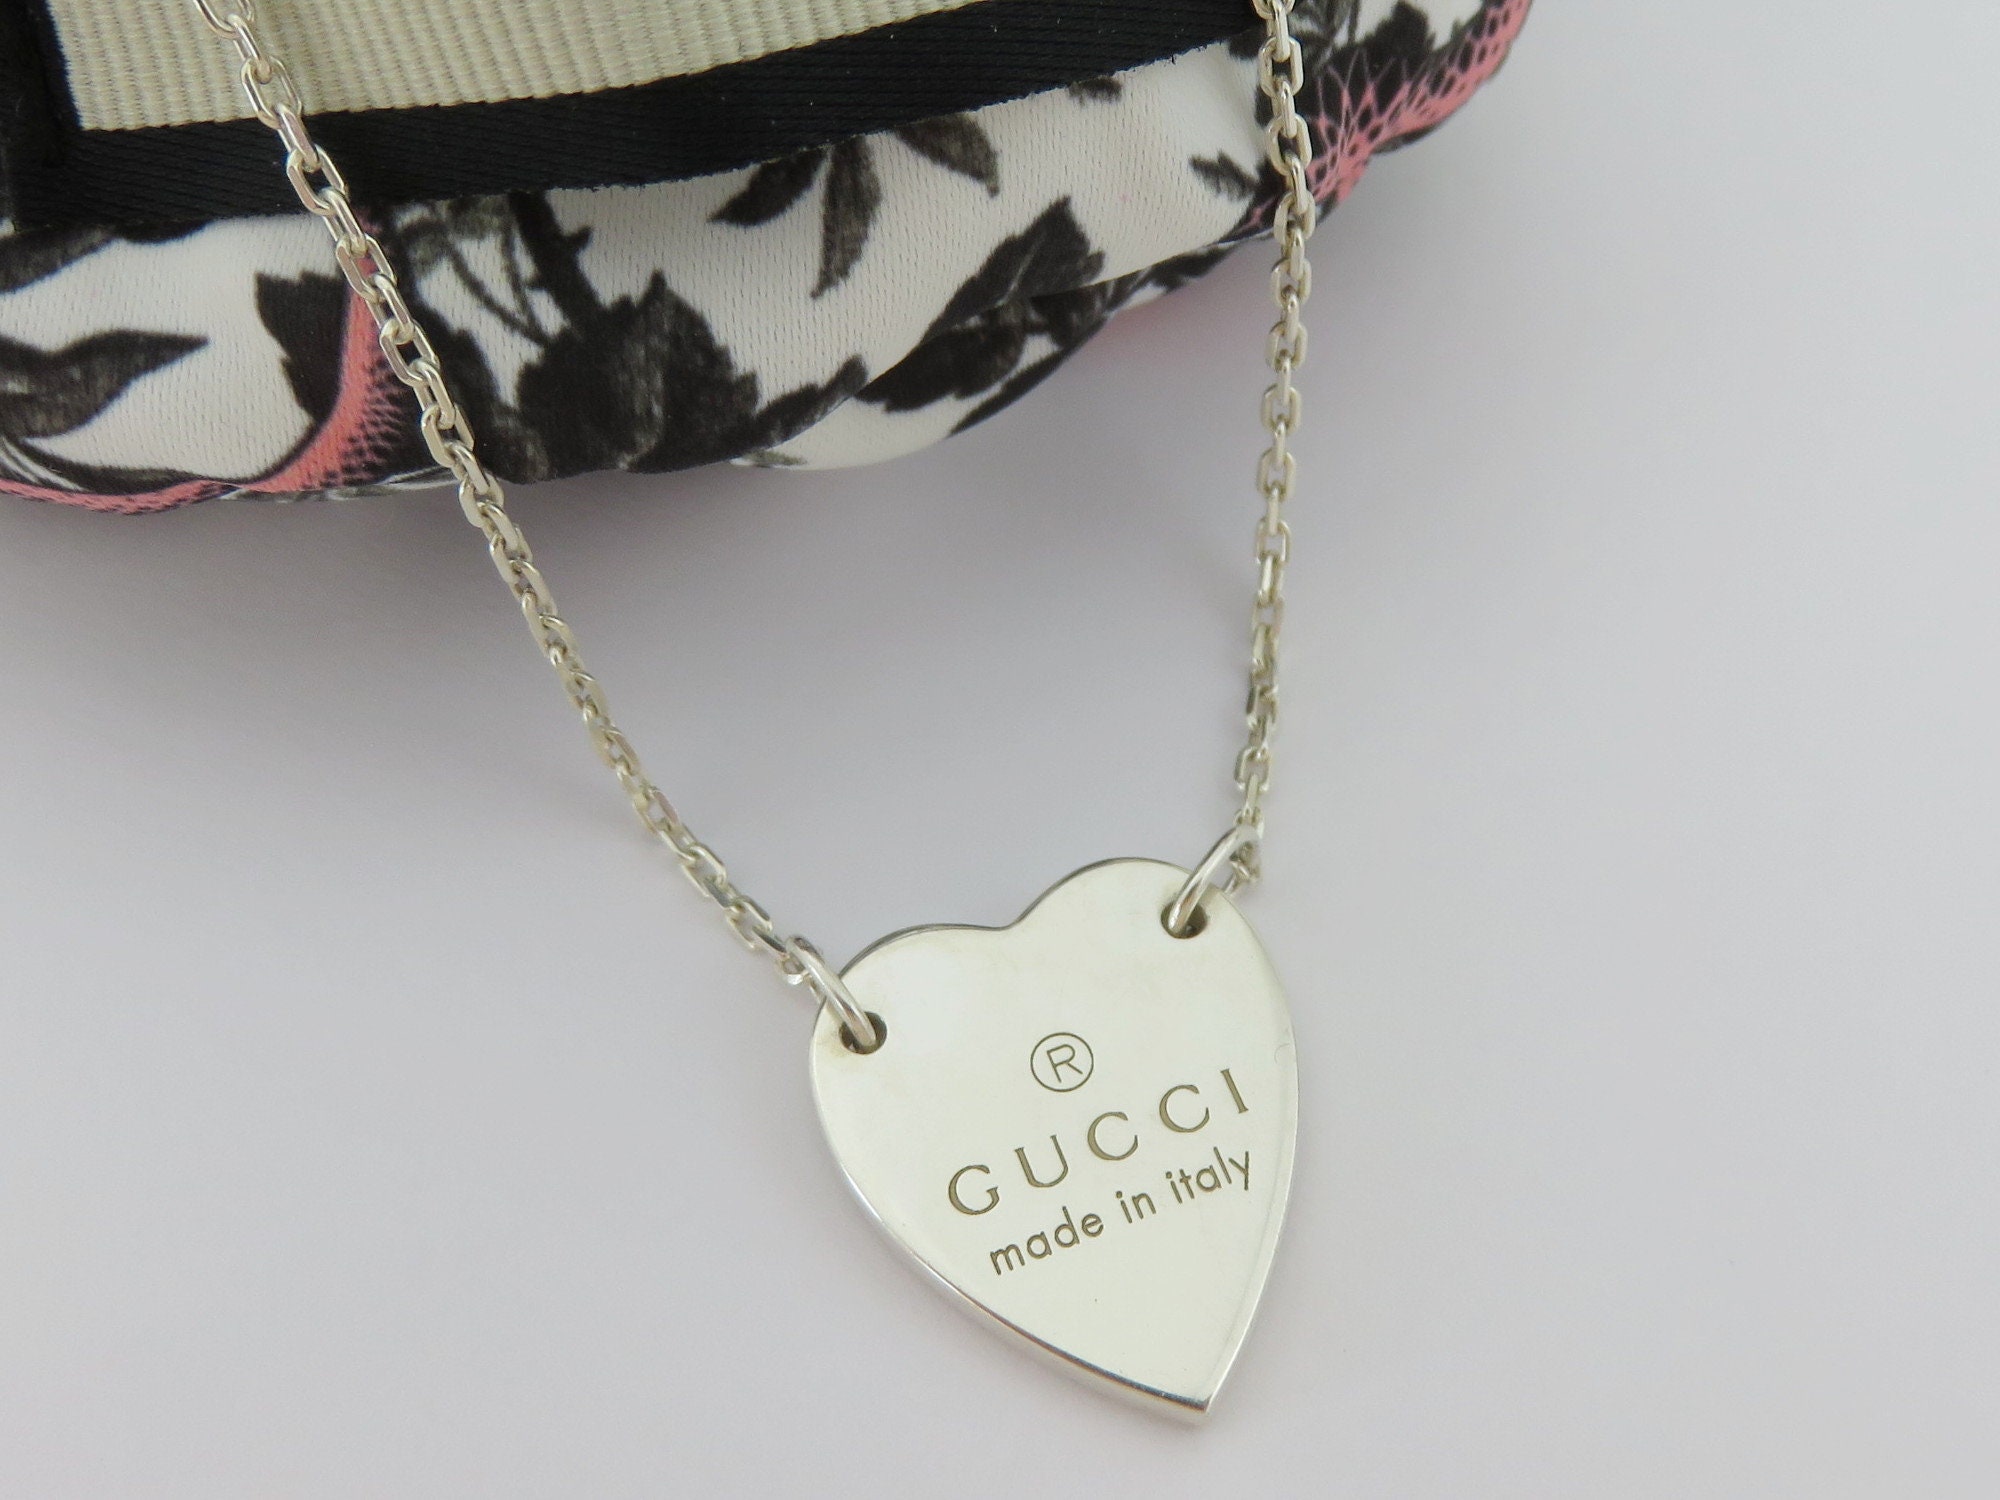 Gucci Sterling Silver GG Design Heart Charm Bracelet